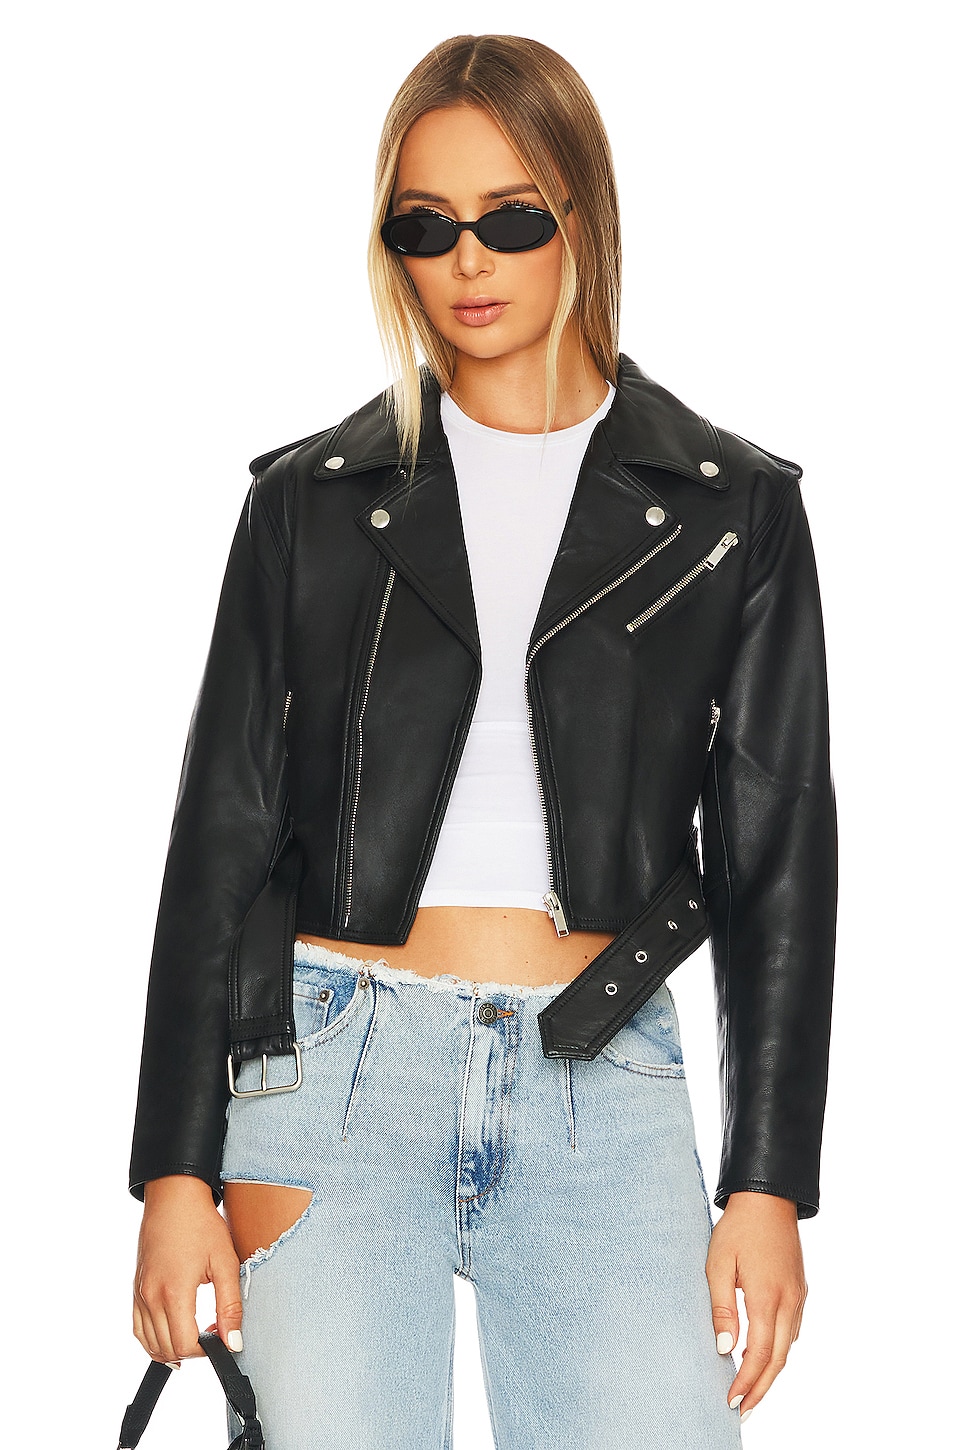 Ena Pelly Goldie Leather Jacket in Black | REVOLVE